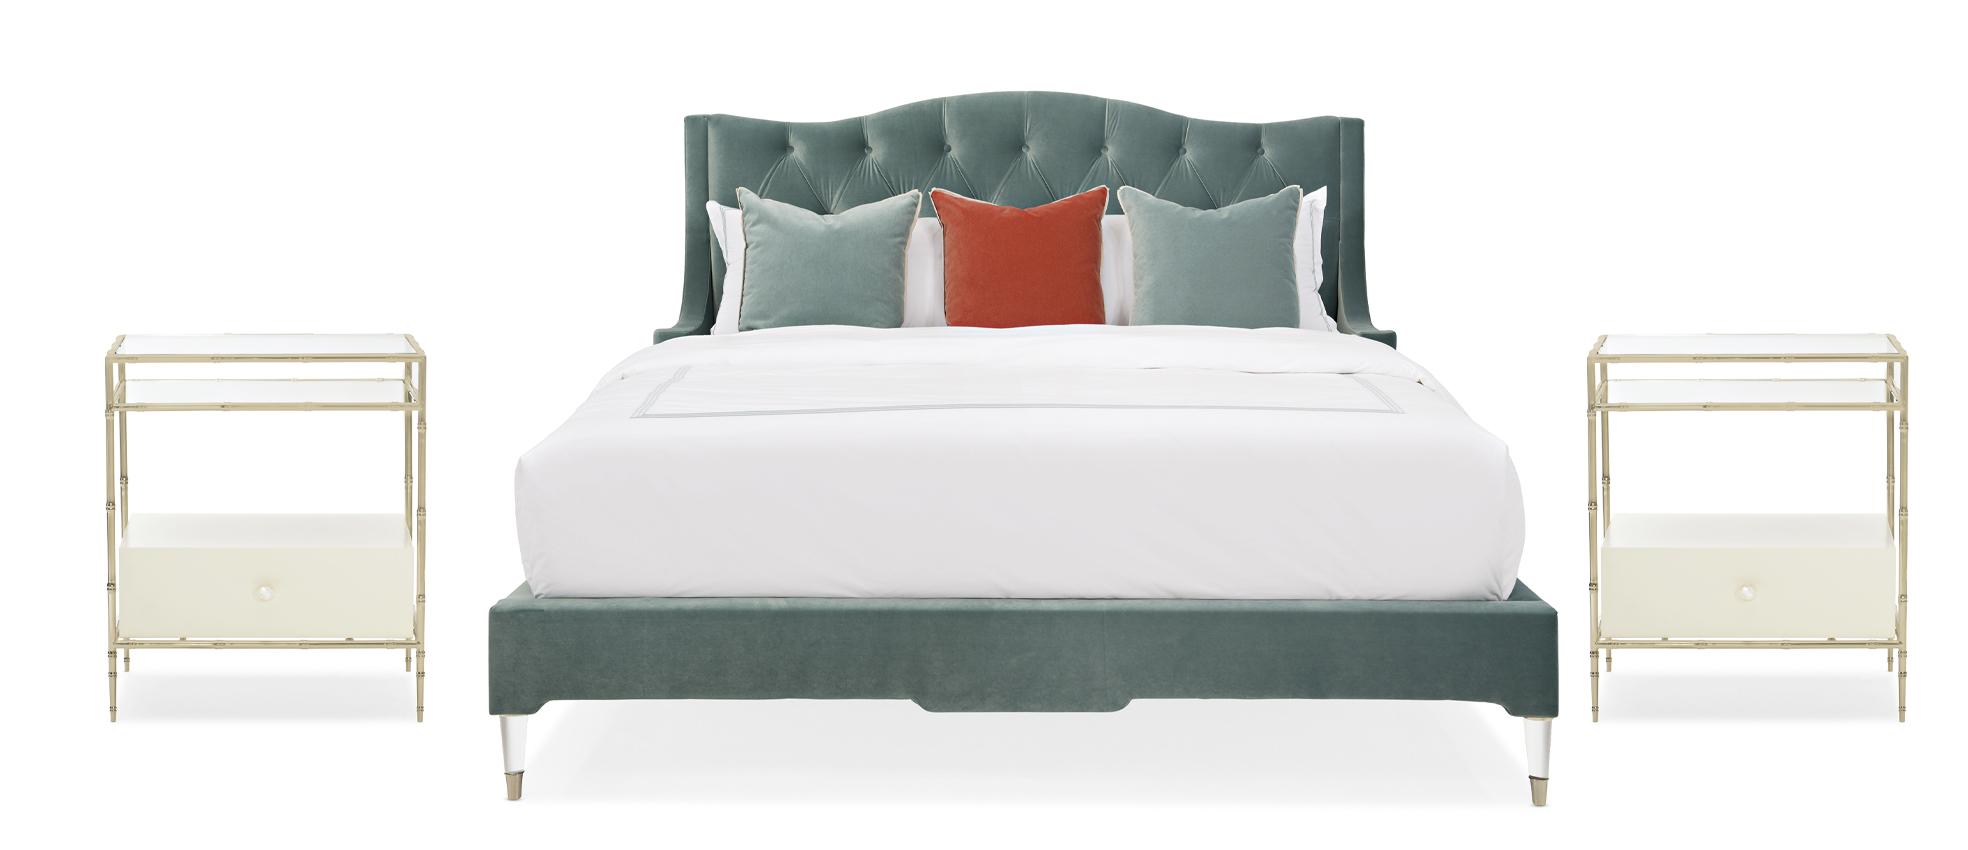 Contemporary Platform Bedroom Set DO NOT DISTURB / GIVE IT A REED CLA-419-141-Set-3 in Blue-green Velvet